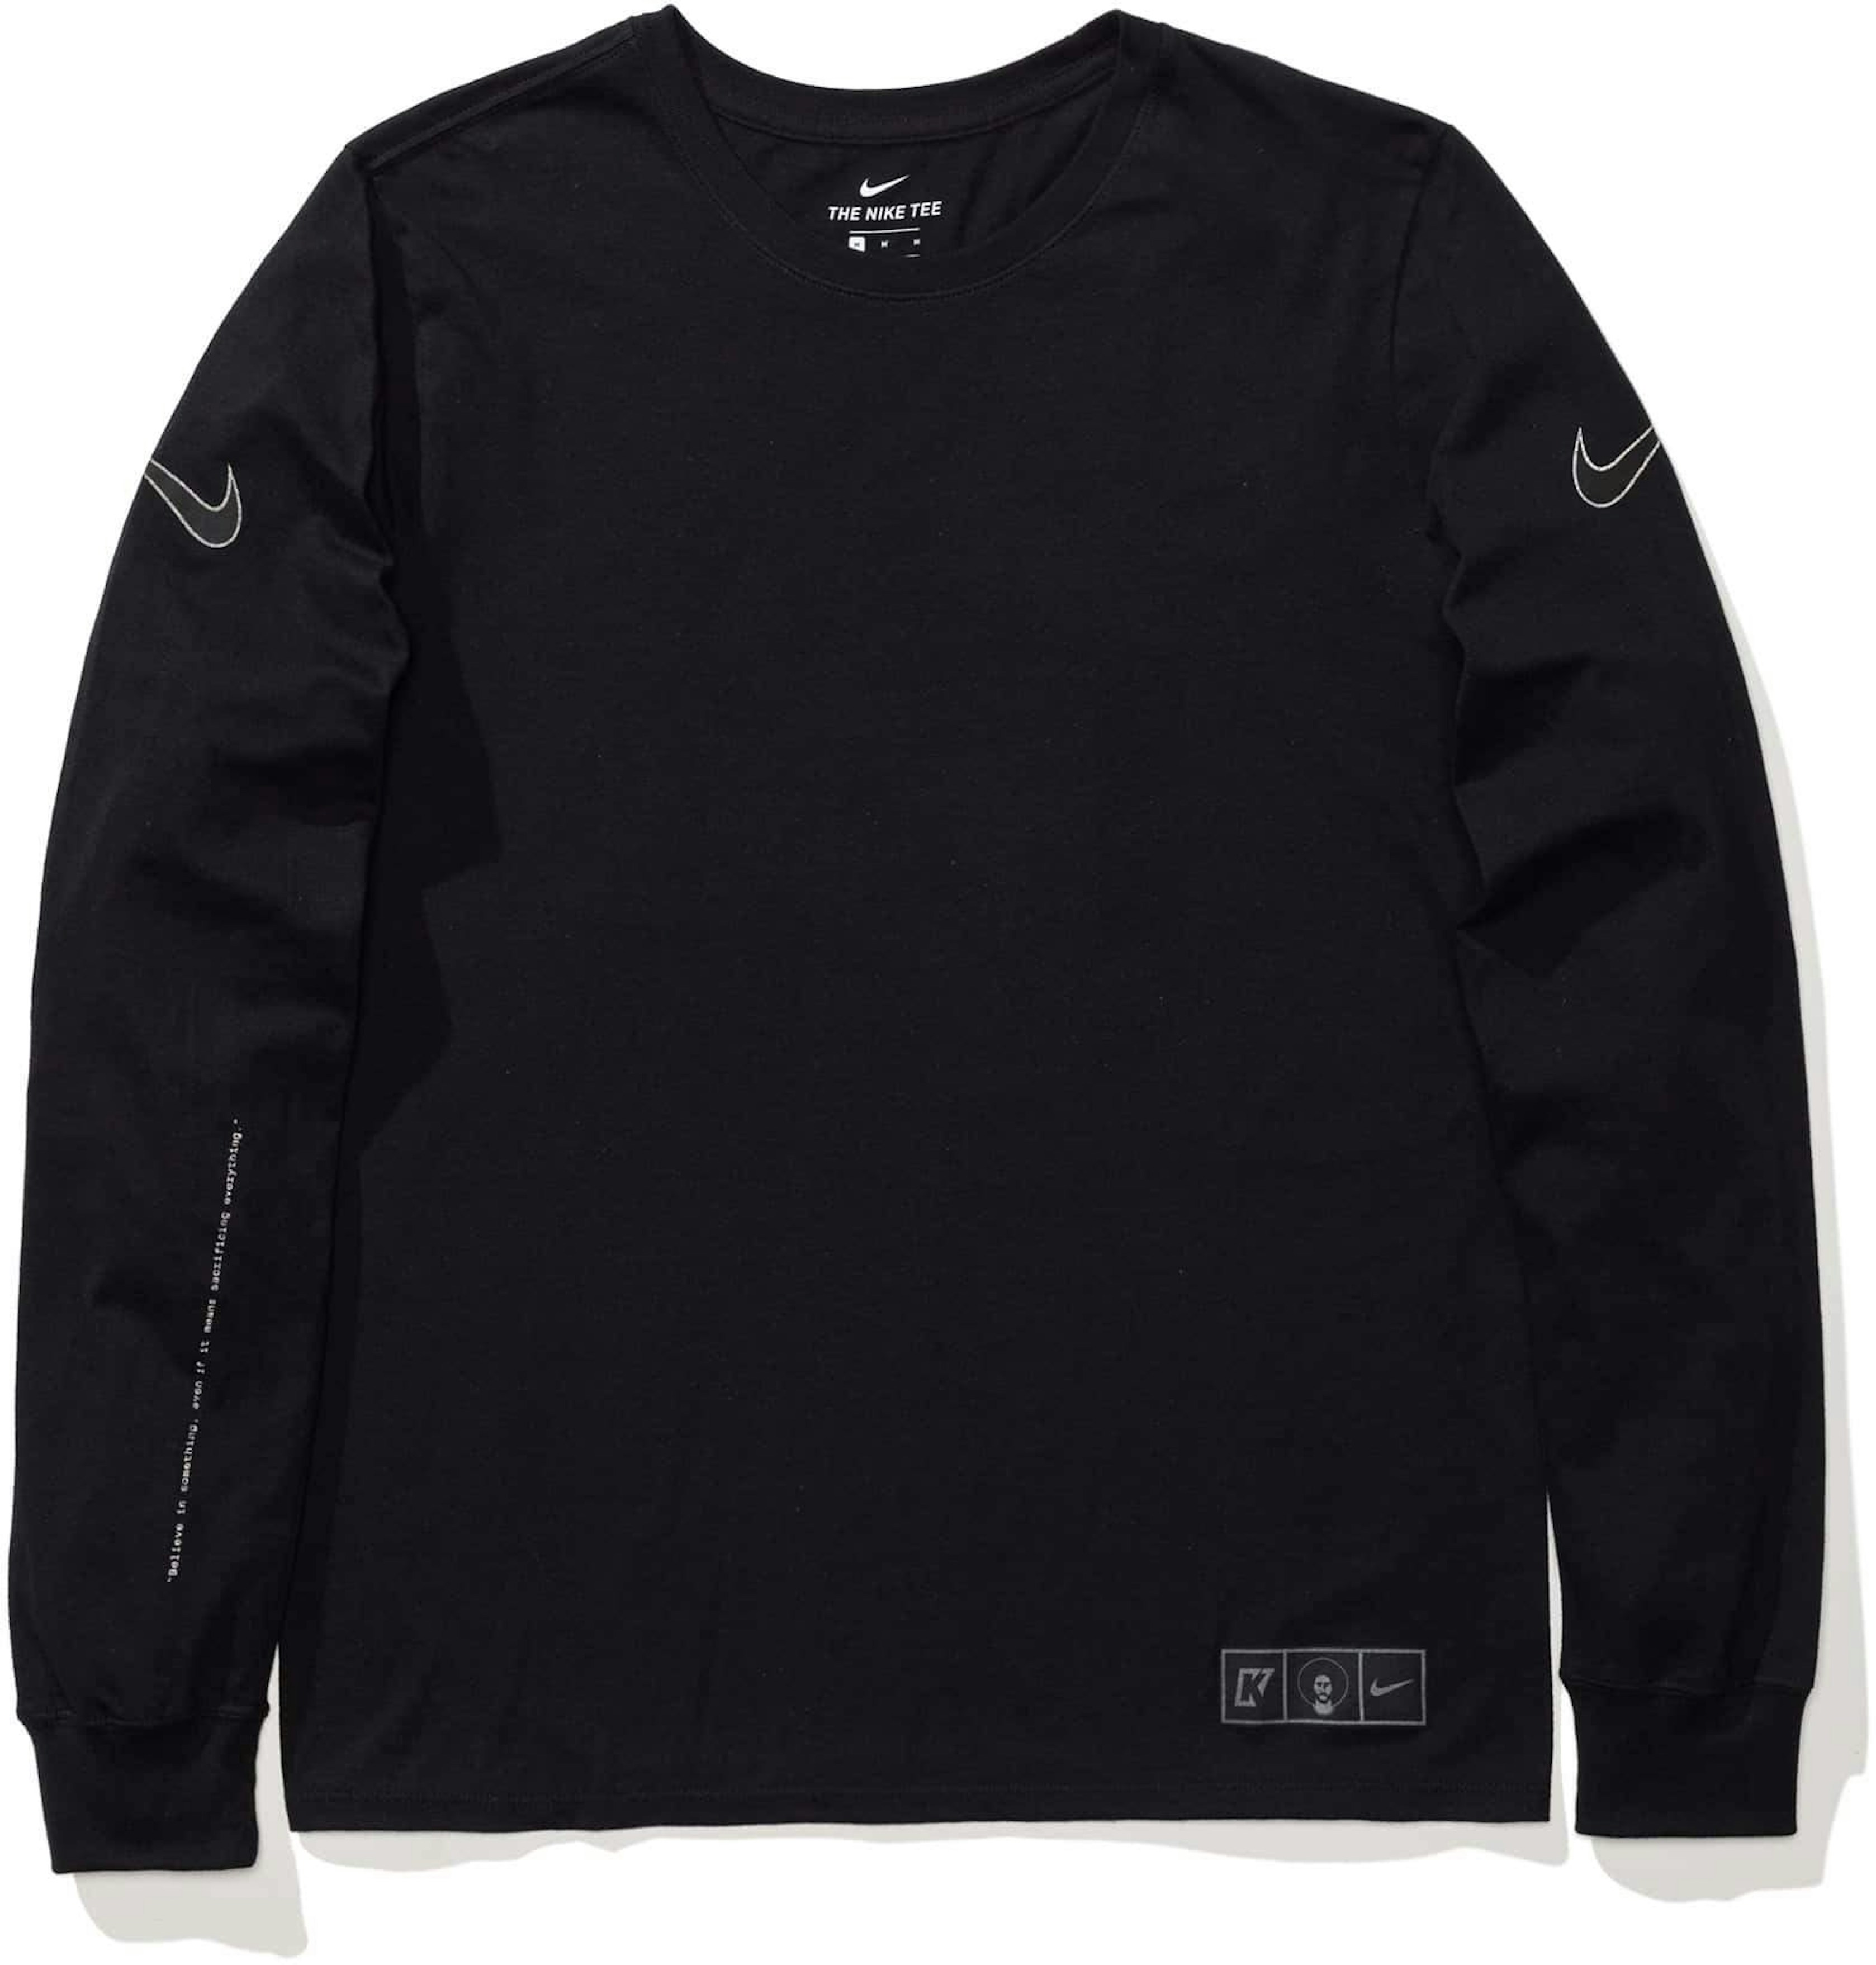 Nike NSW Colin Kaepernick Longsleeve T-Shirt Black - FW18